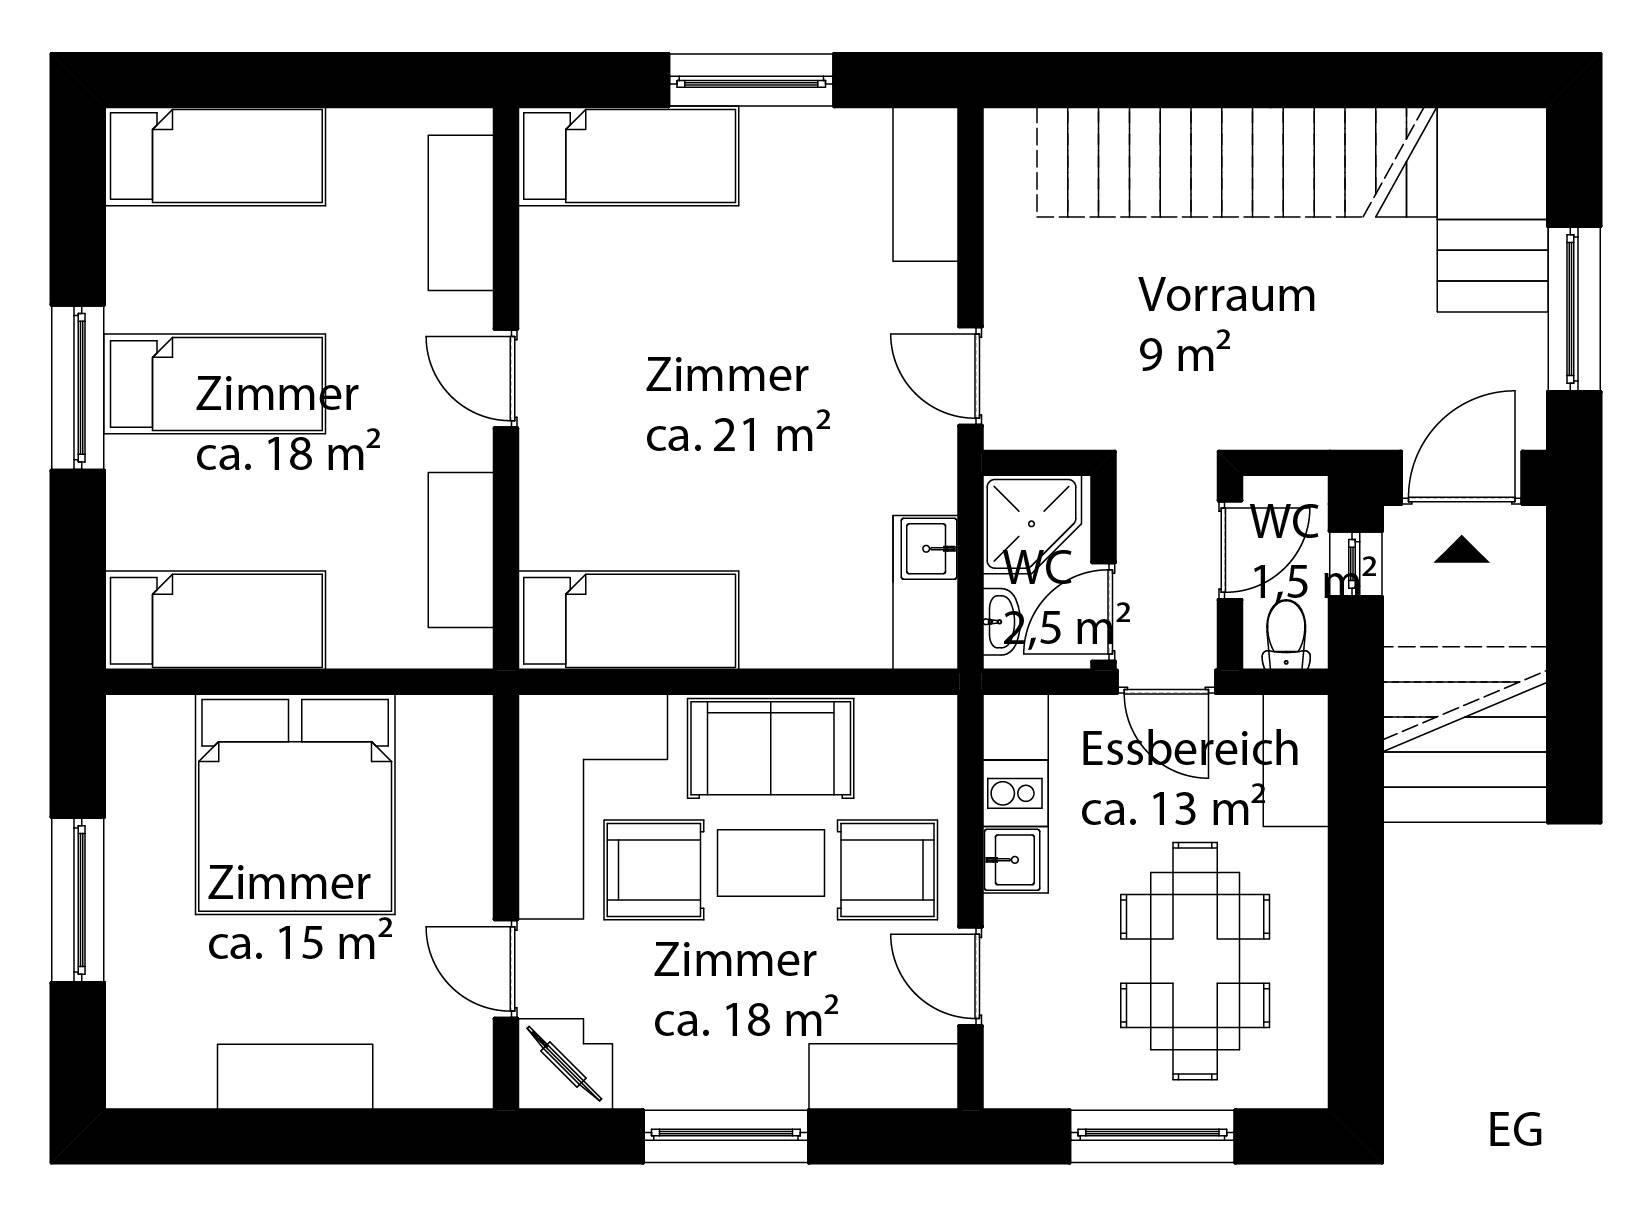 DAREBELL apartment - Image 2